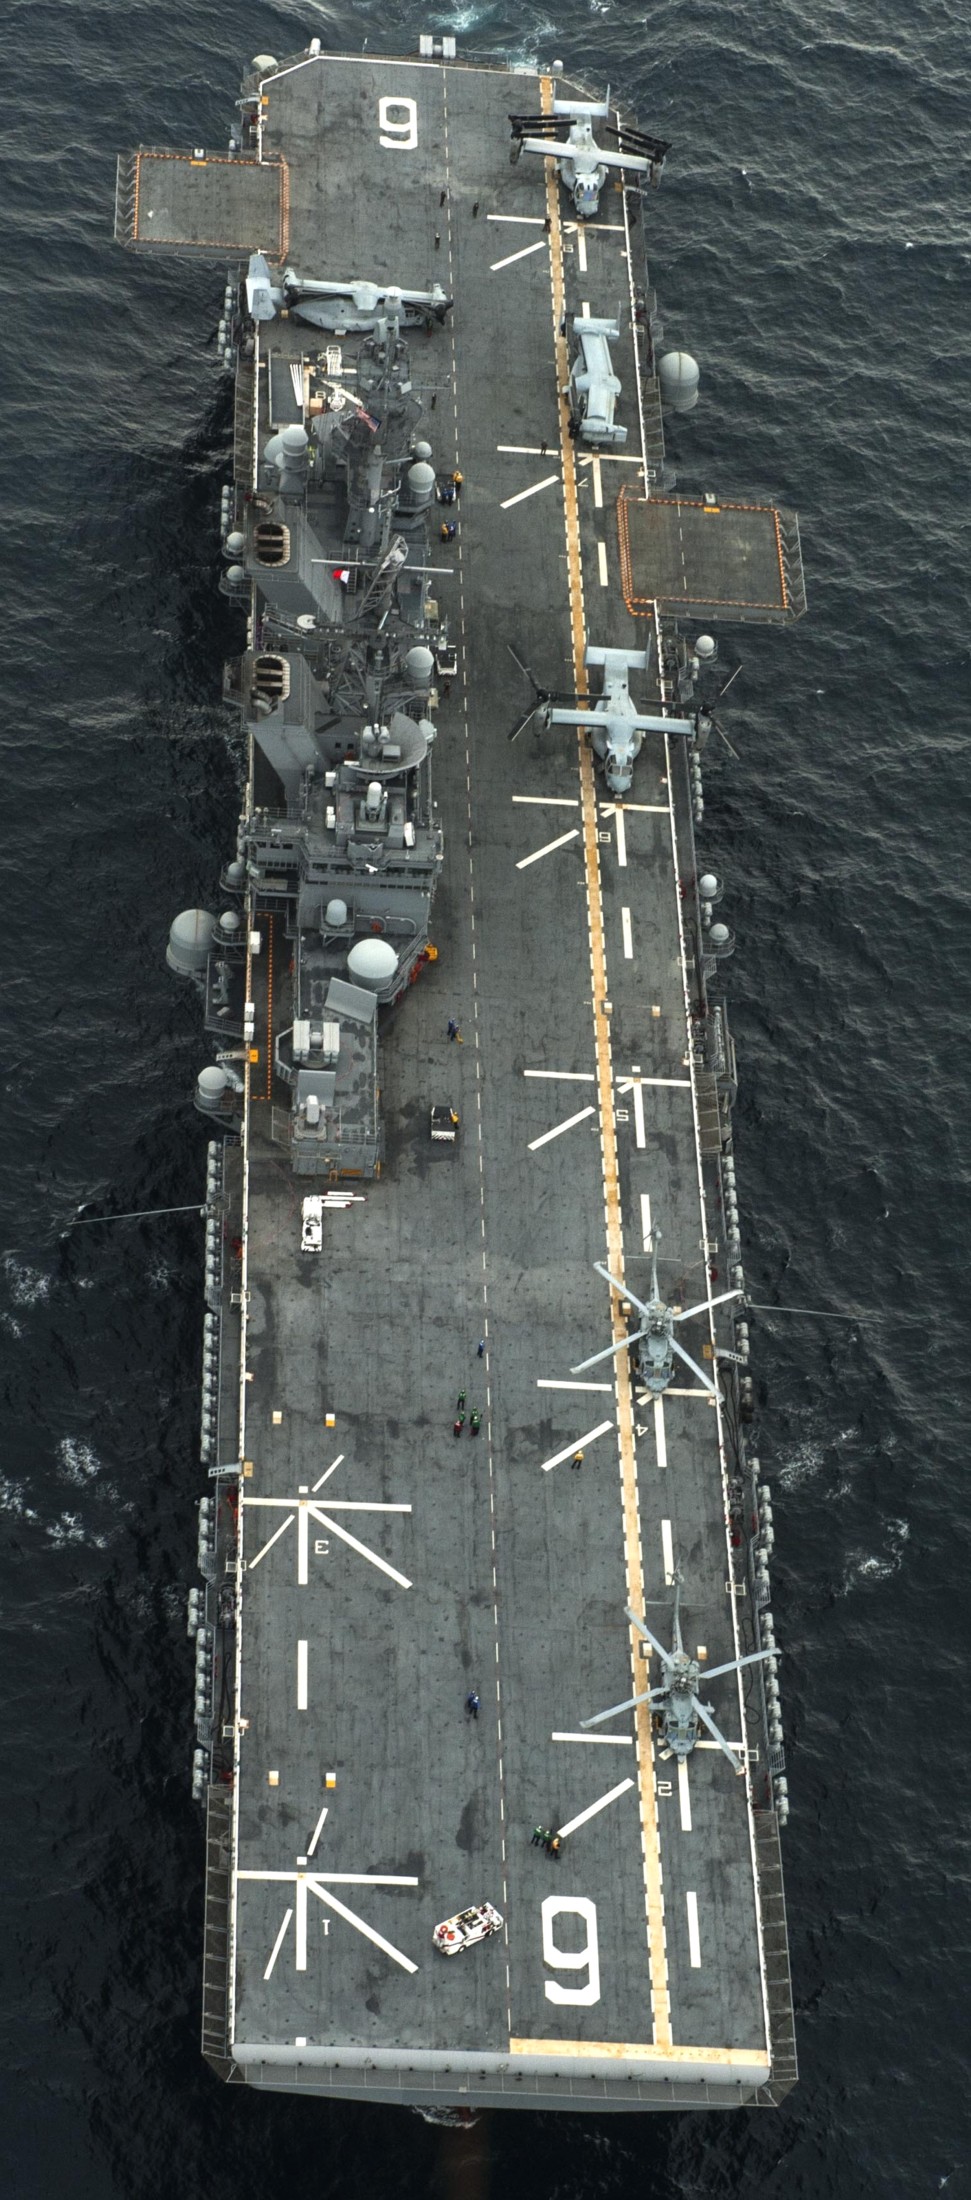 lha-6 uss america amphibious assault ship landing us navy 79